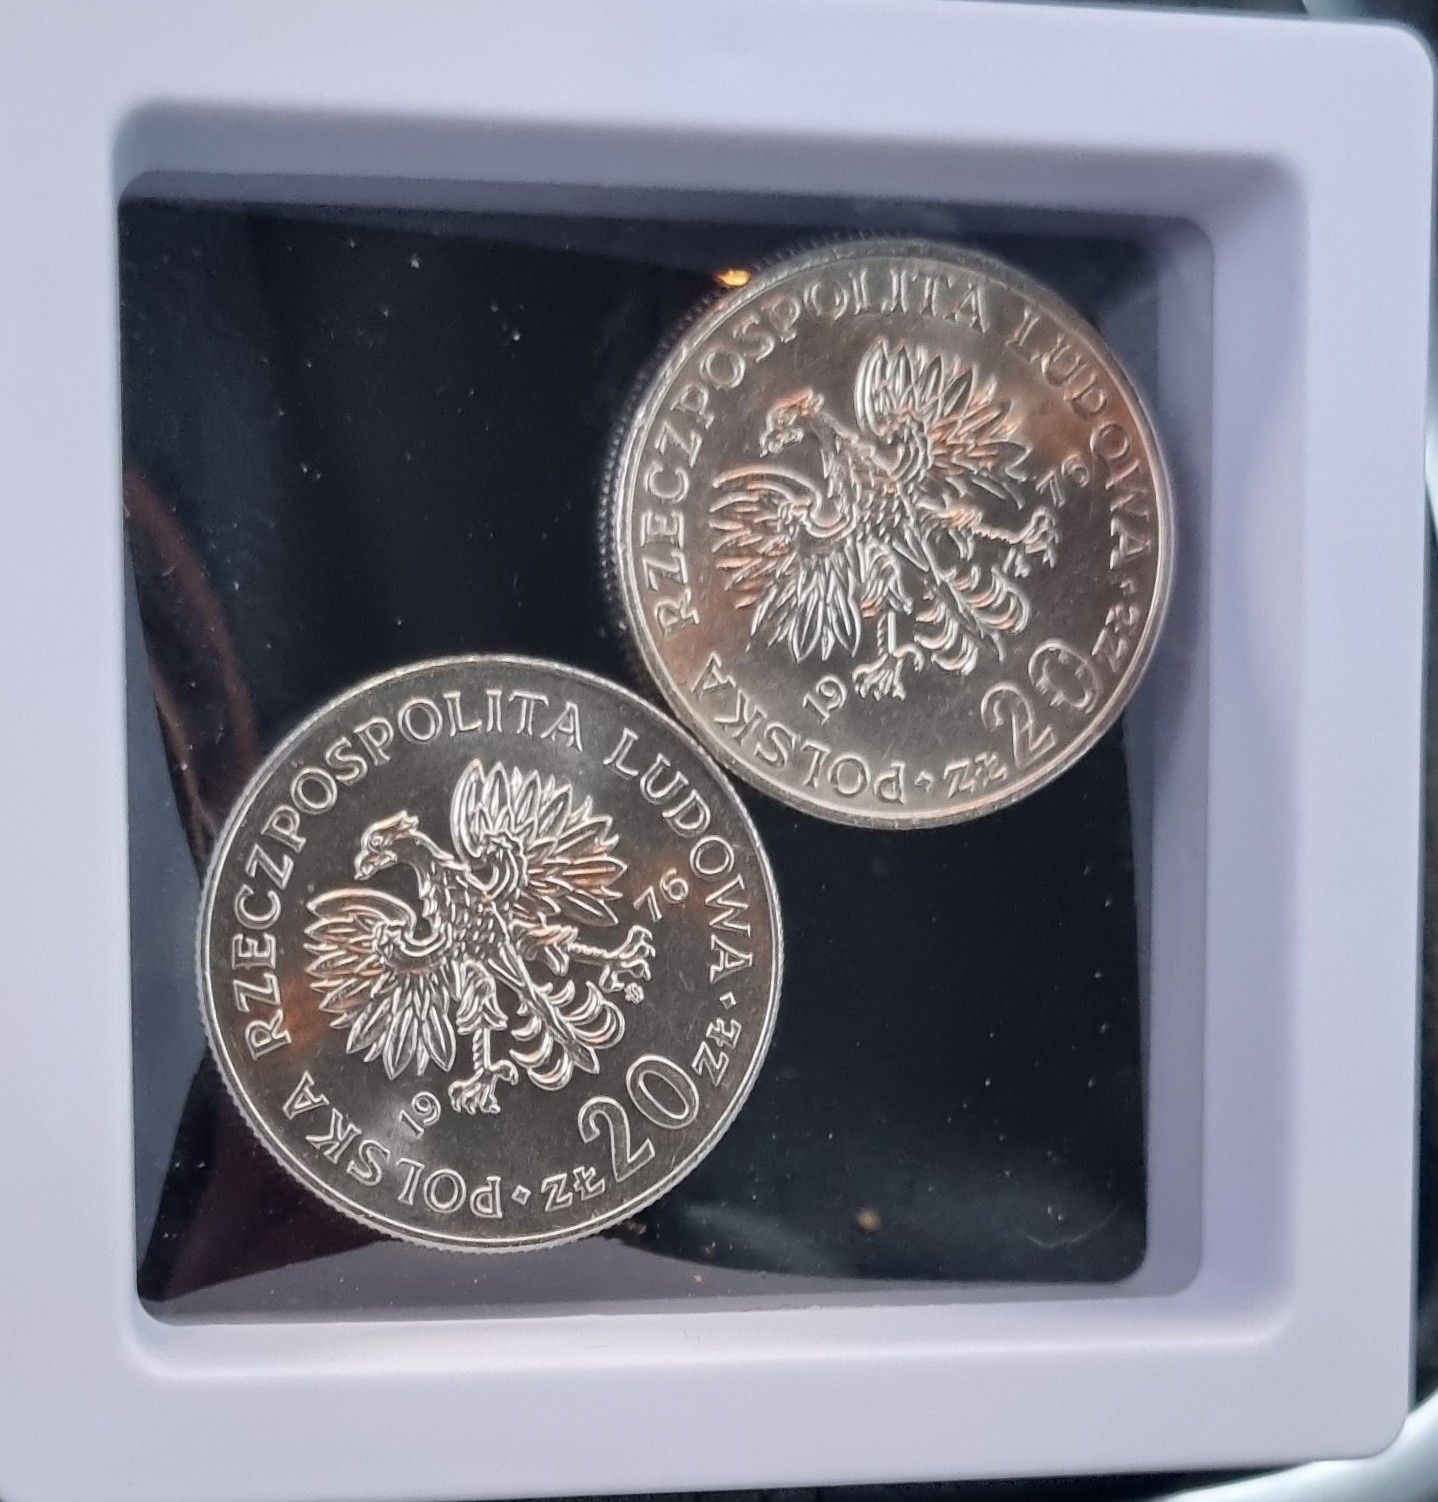 Stare monety / monety 20 zł 1976 rok Nowotko